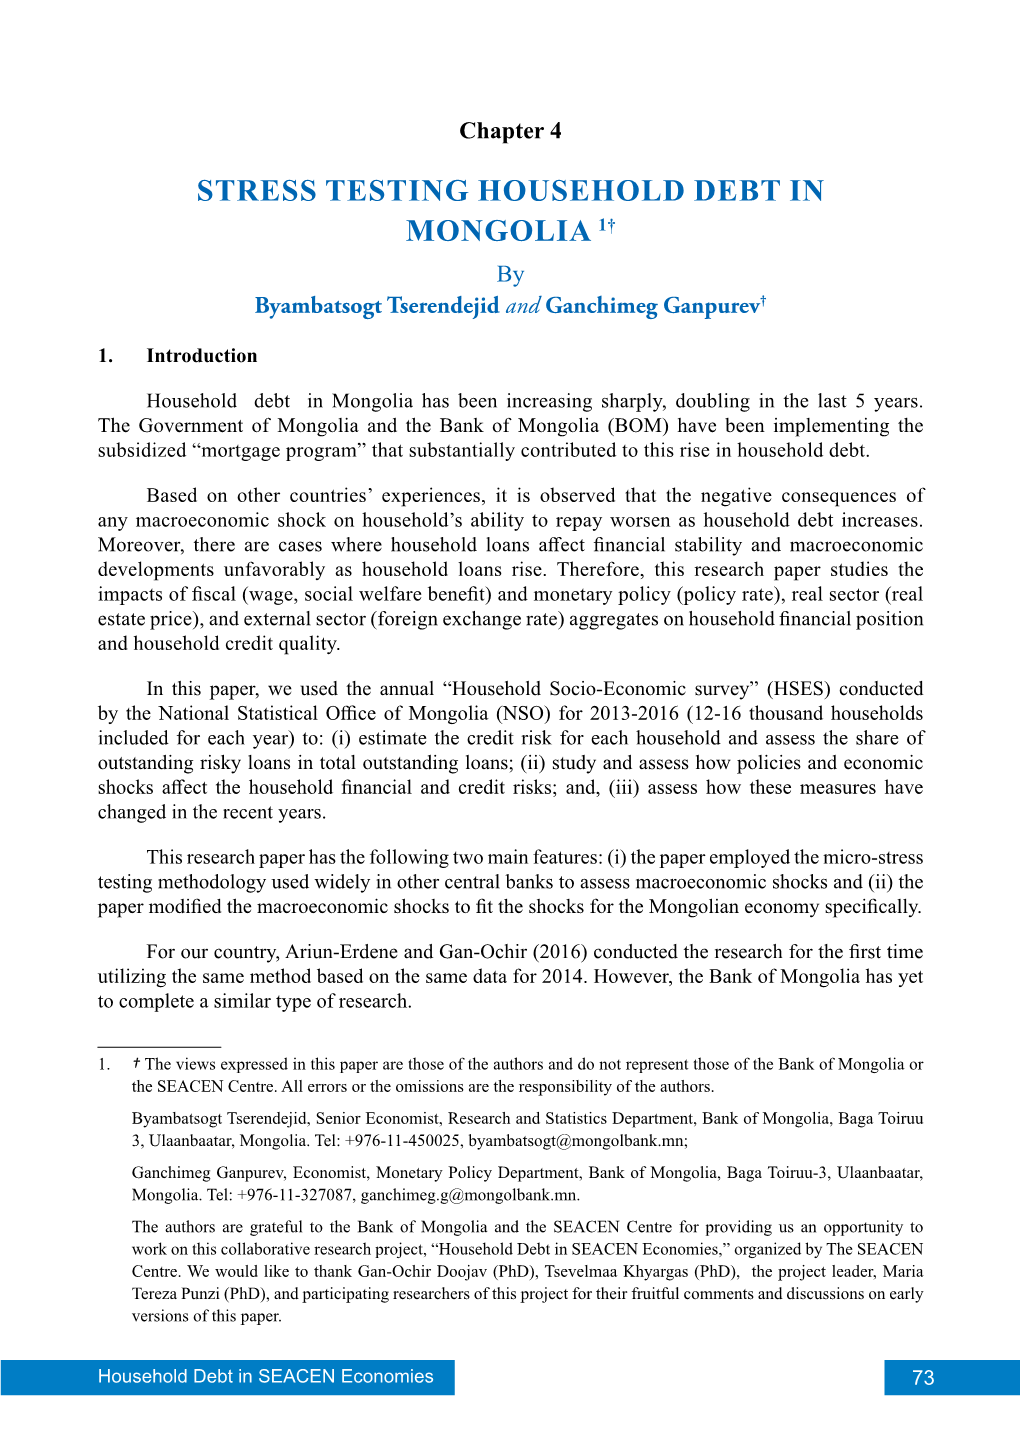 STRESS TESTING HOUSEHOLD DEBT in MONGOLIA 1† by Byambatsogt Tserendejid and Ganchimeg Ganpurev†